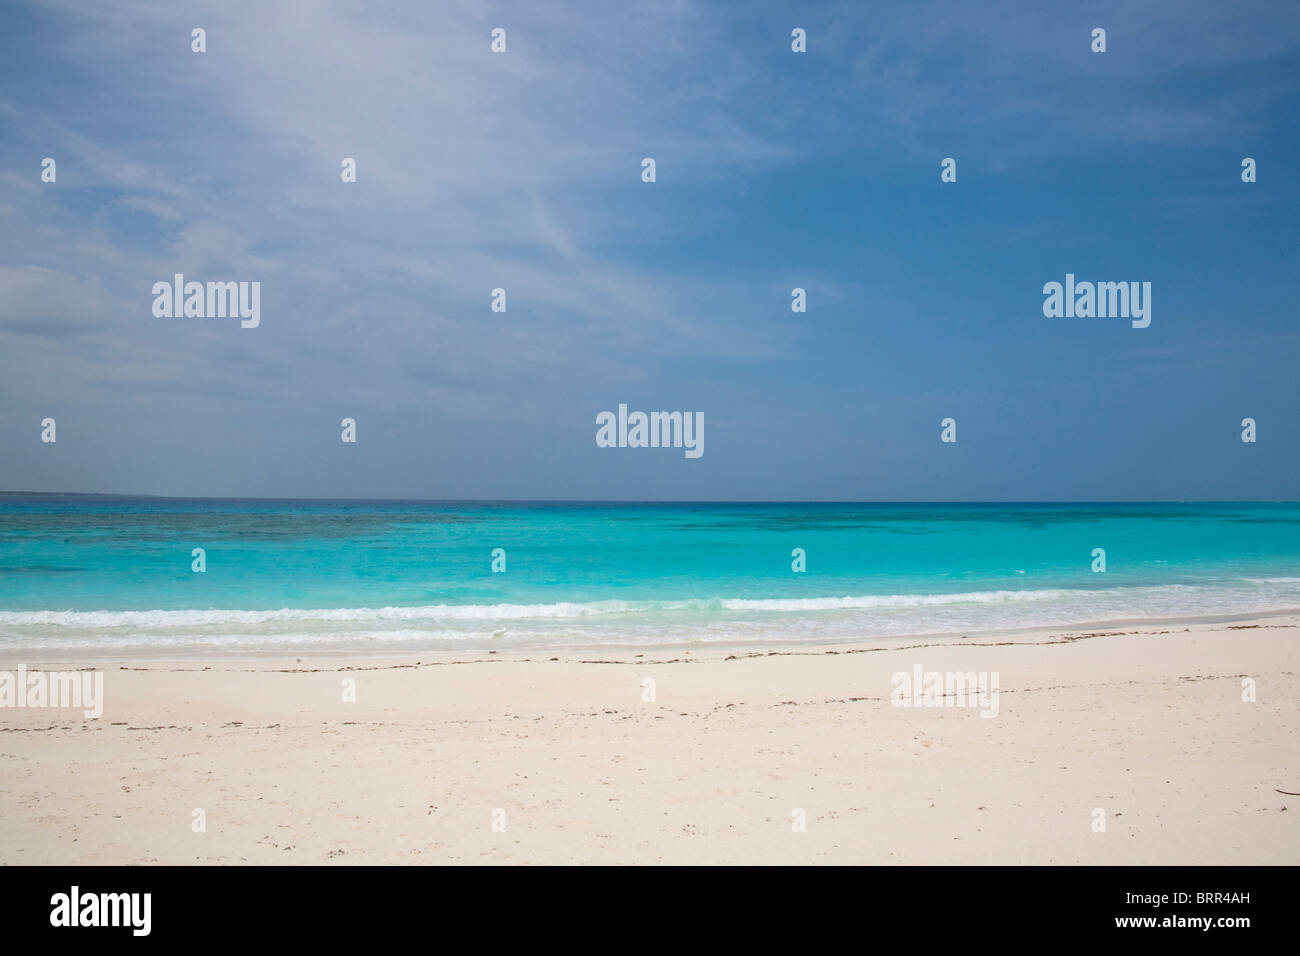 Tropical Island beach scene Stock Photo